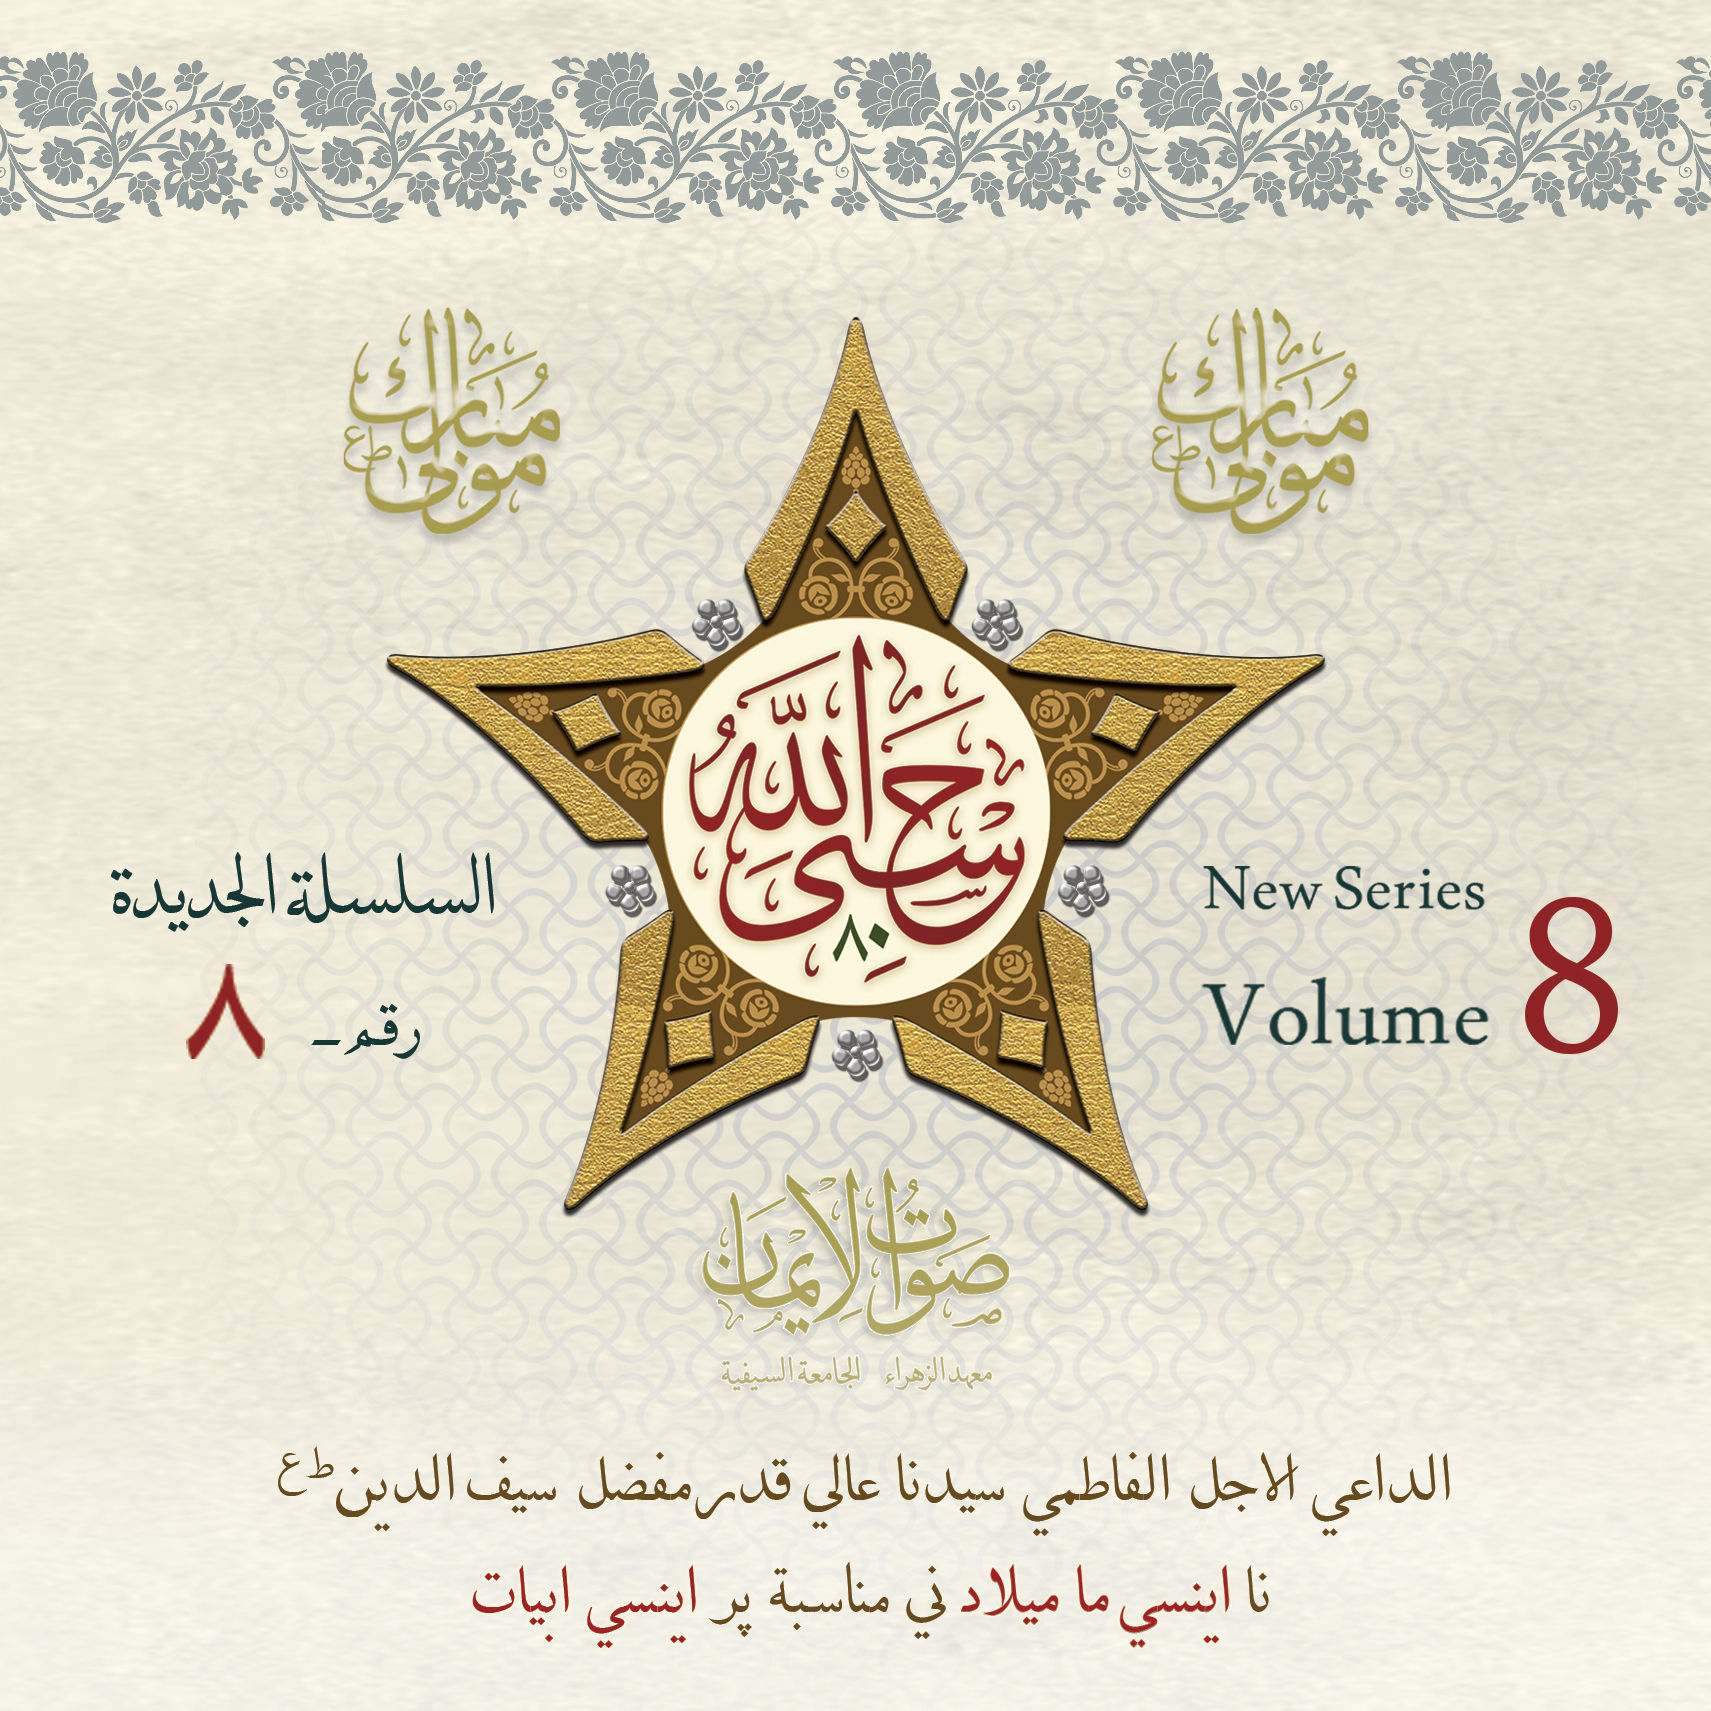 Volume Eight of Sautuliman New Series